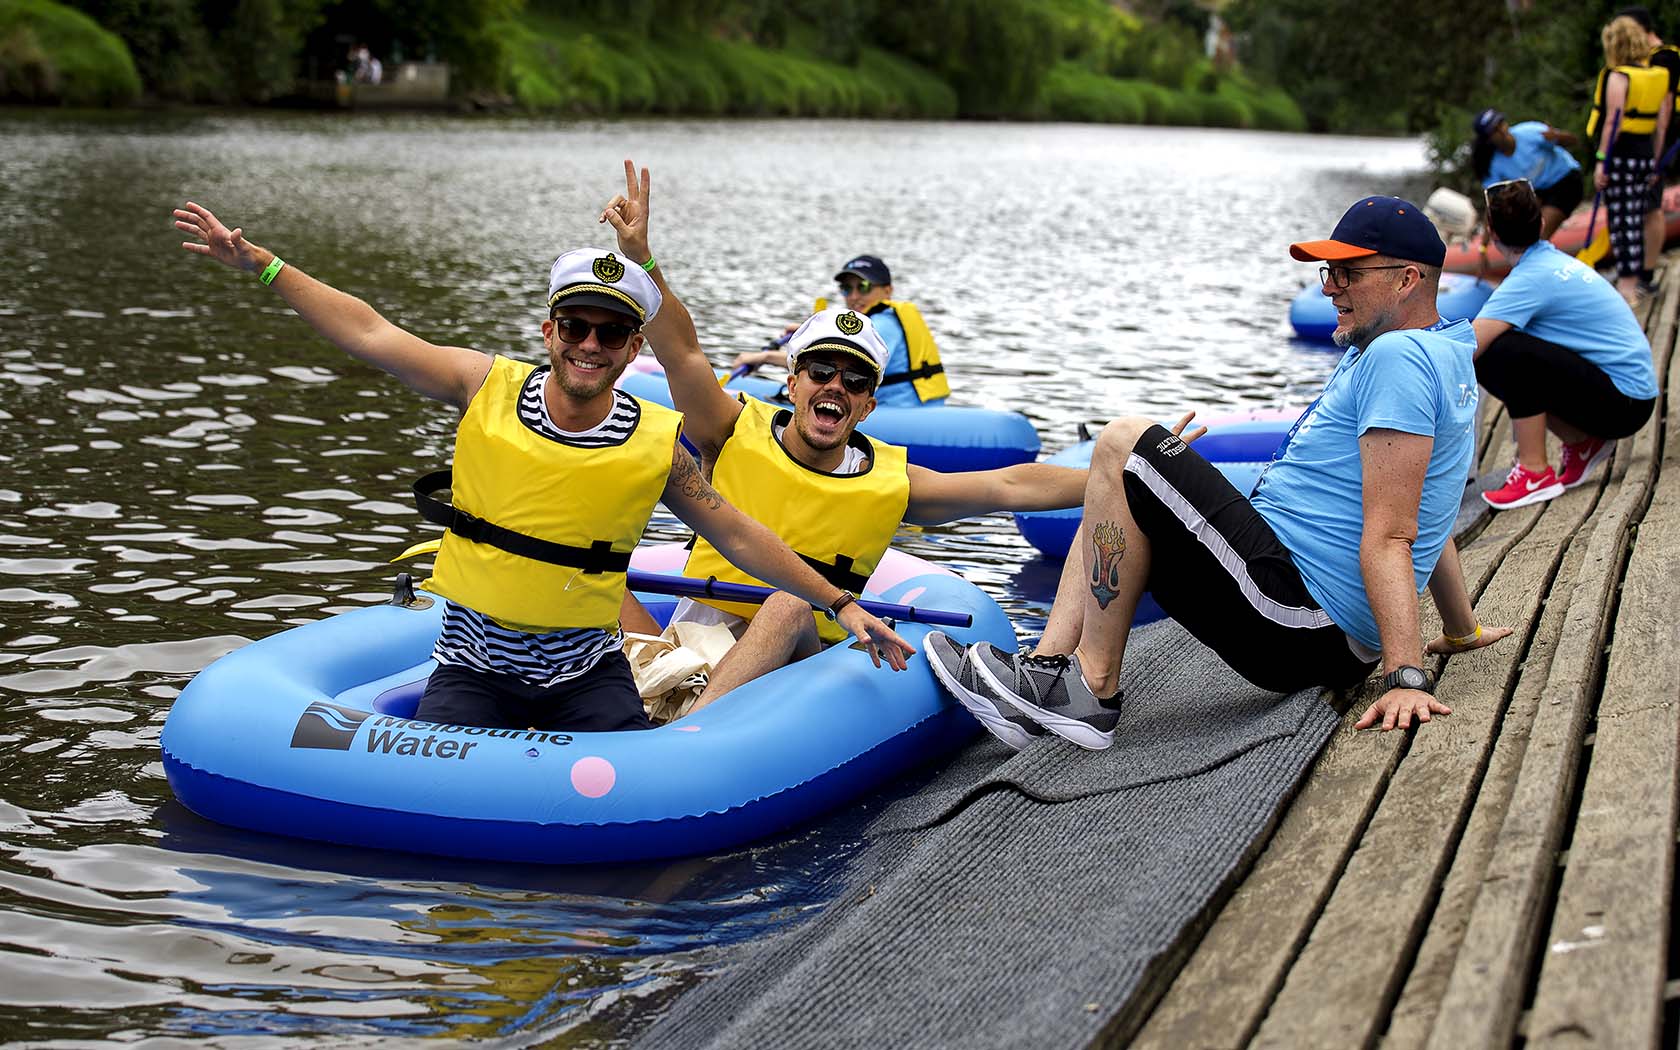 Yarra River Inflatable Regatta 2017